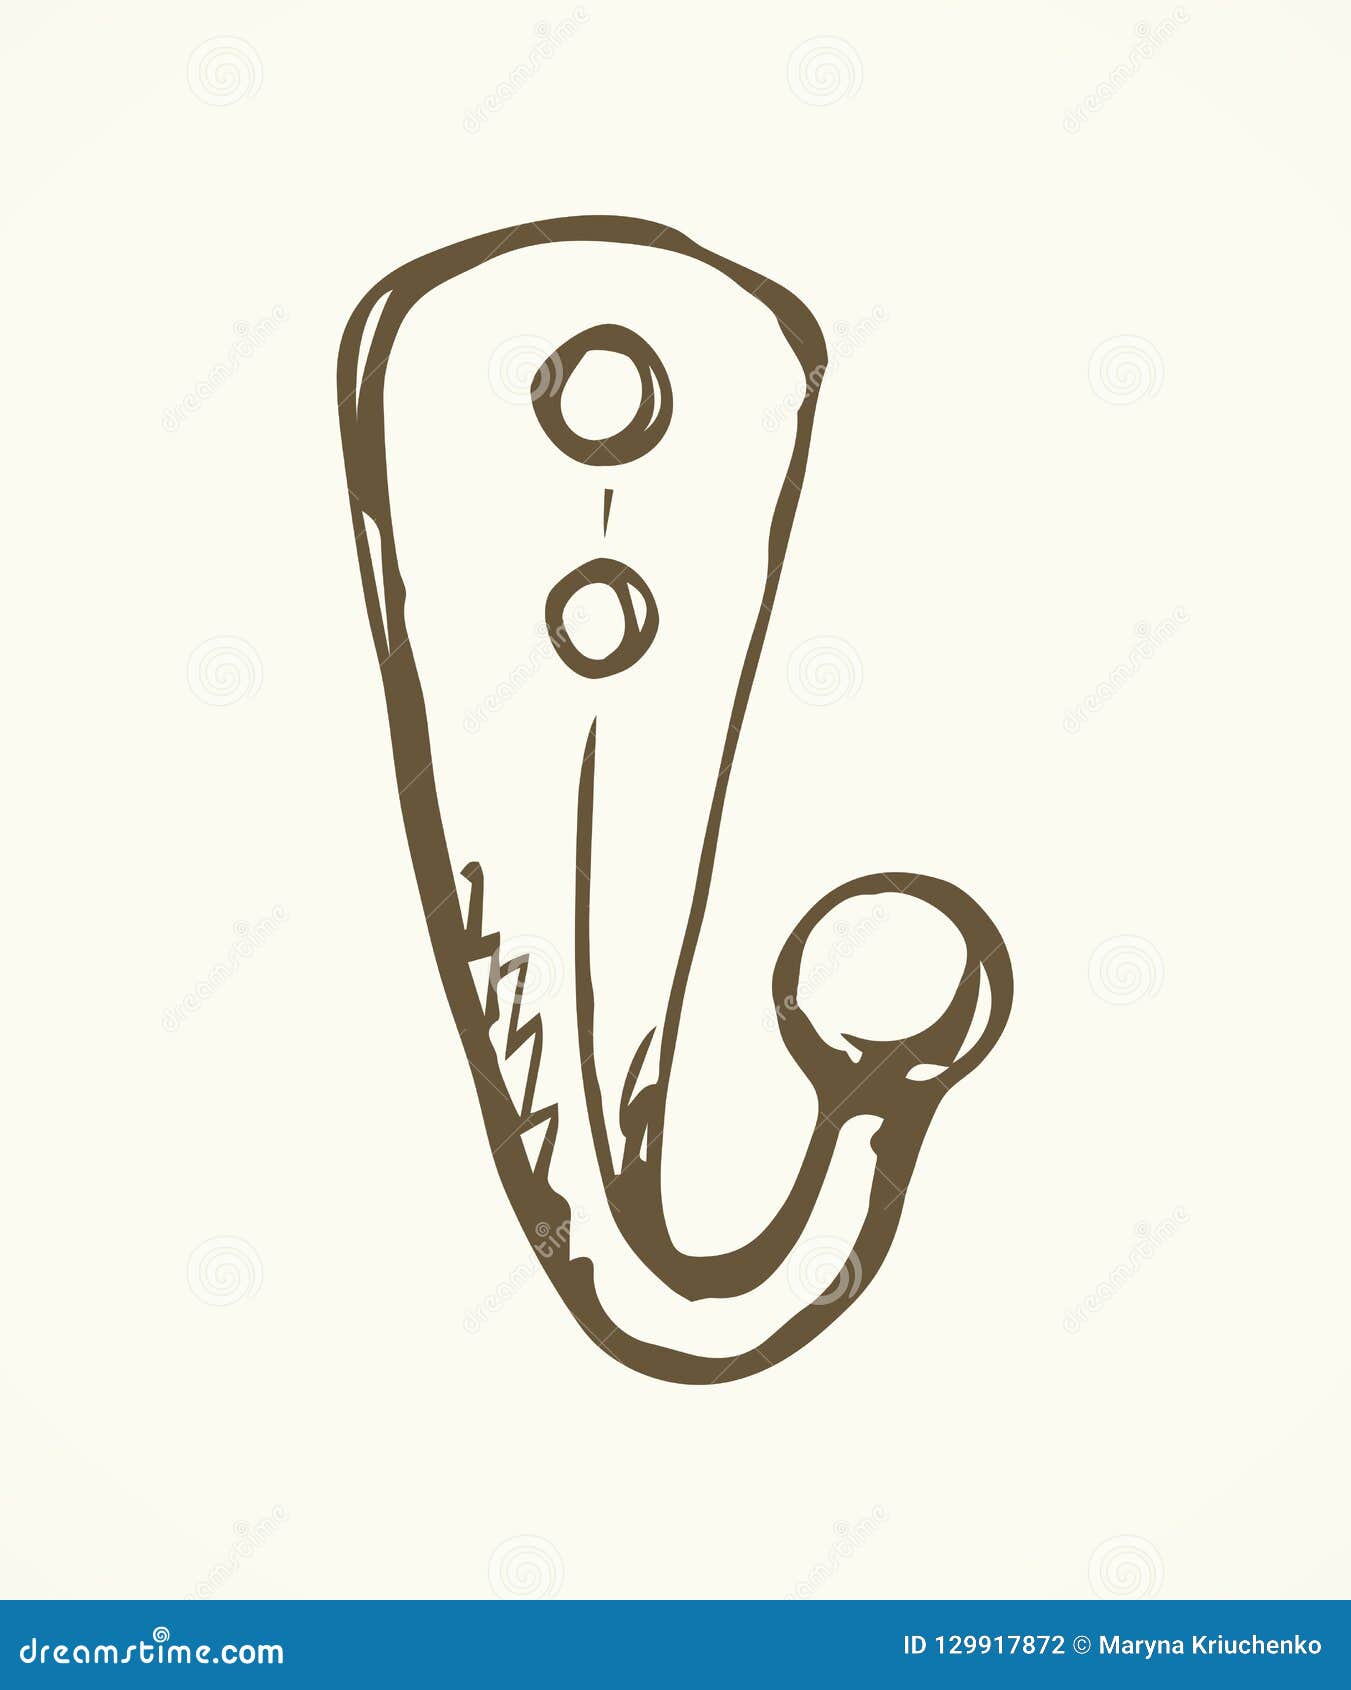 https://thumbs.dreamstime.com/z/small-metal-bath-peg-light-floor-backdrop-freehand-outline-black-ink-hand-drawn-object-emblem-insignia-sketchy-modern-art-129917872.jpg